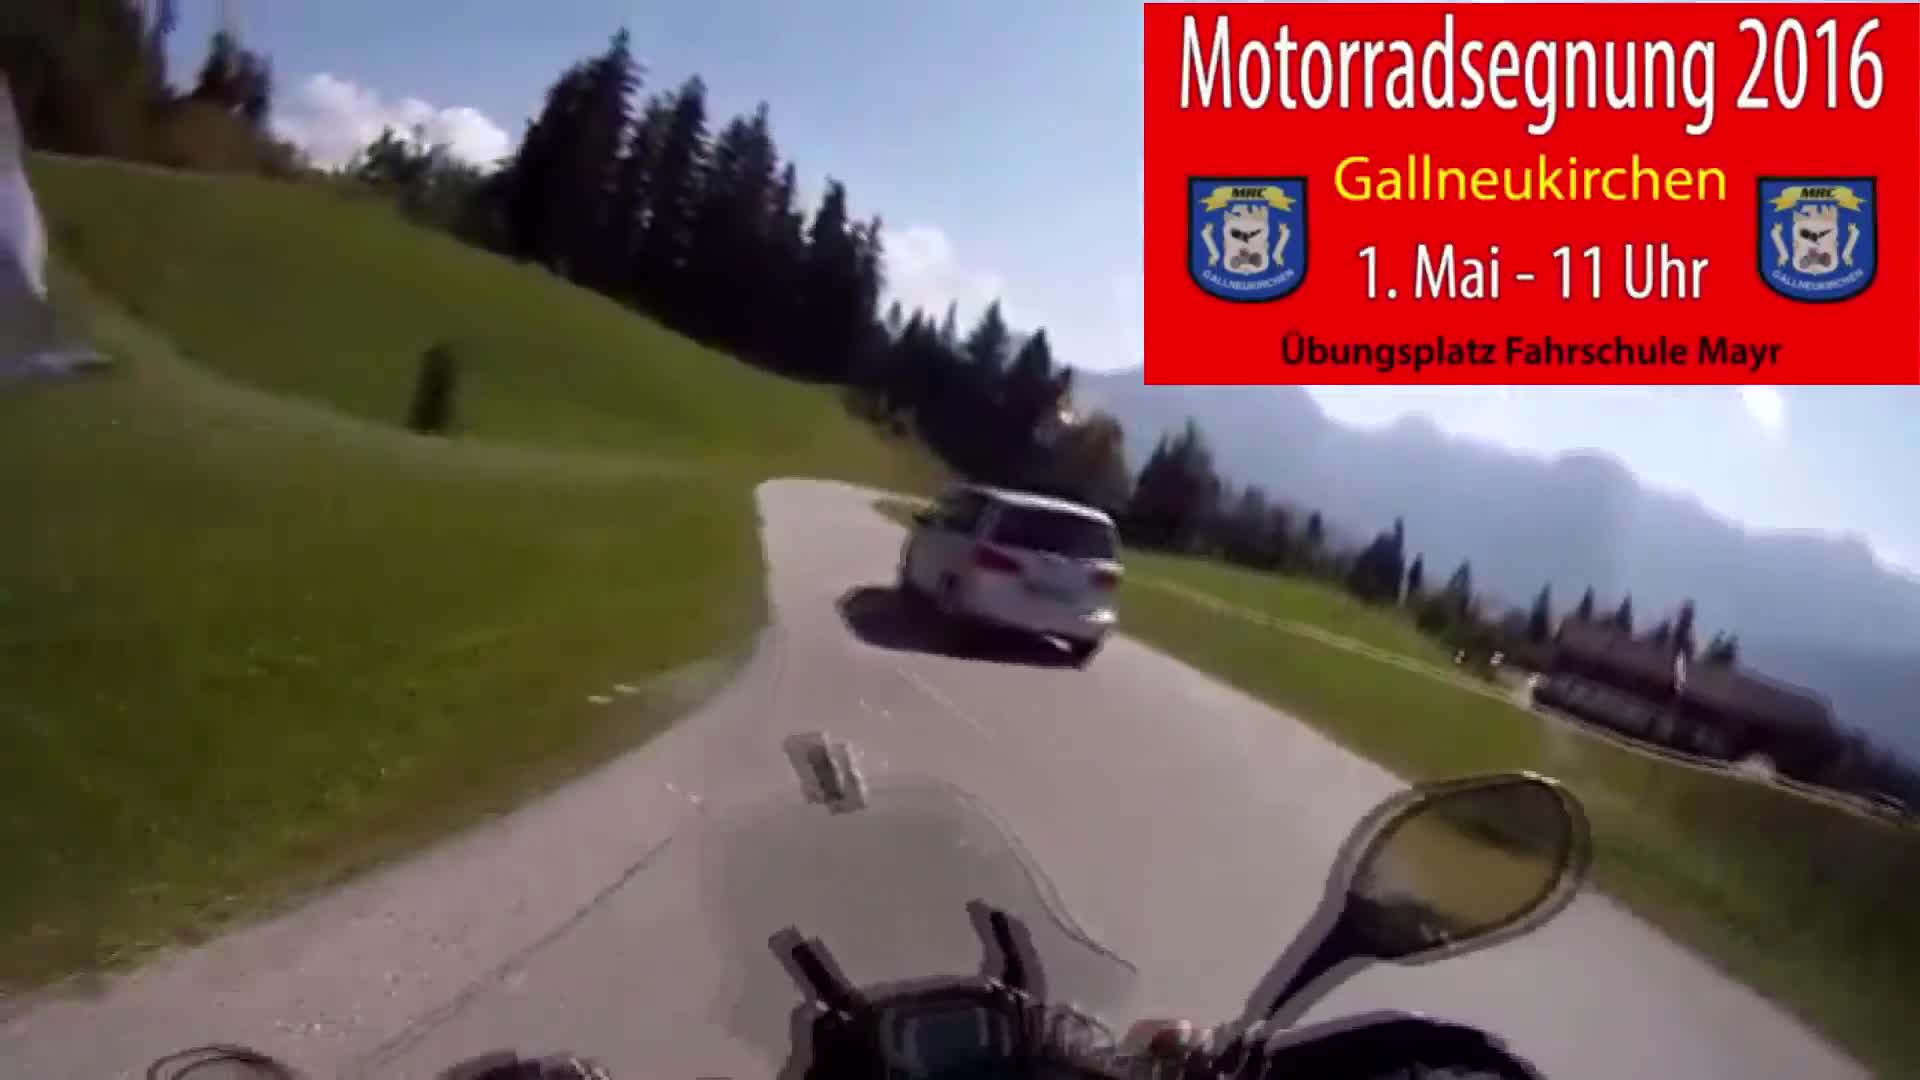 20. Motorradsegnung Gallneukirchen